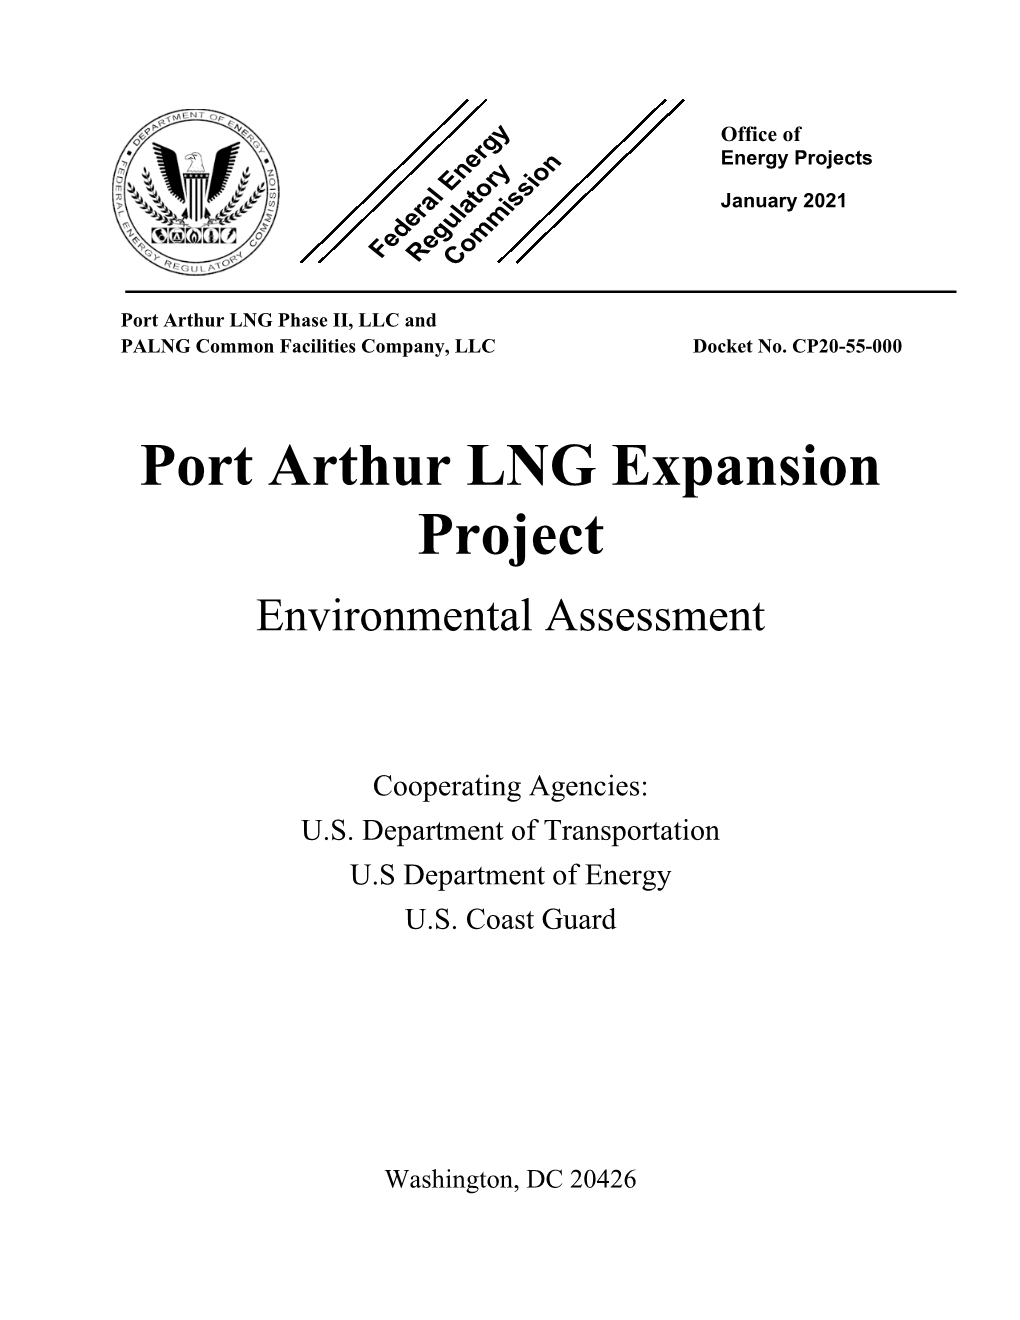 Port Arthur LNG Expansion Project Environmental Assessment